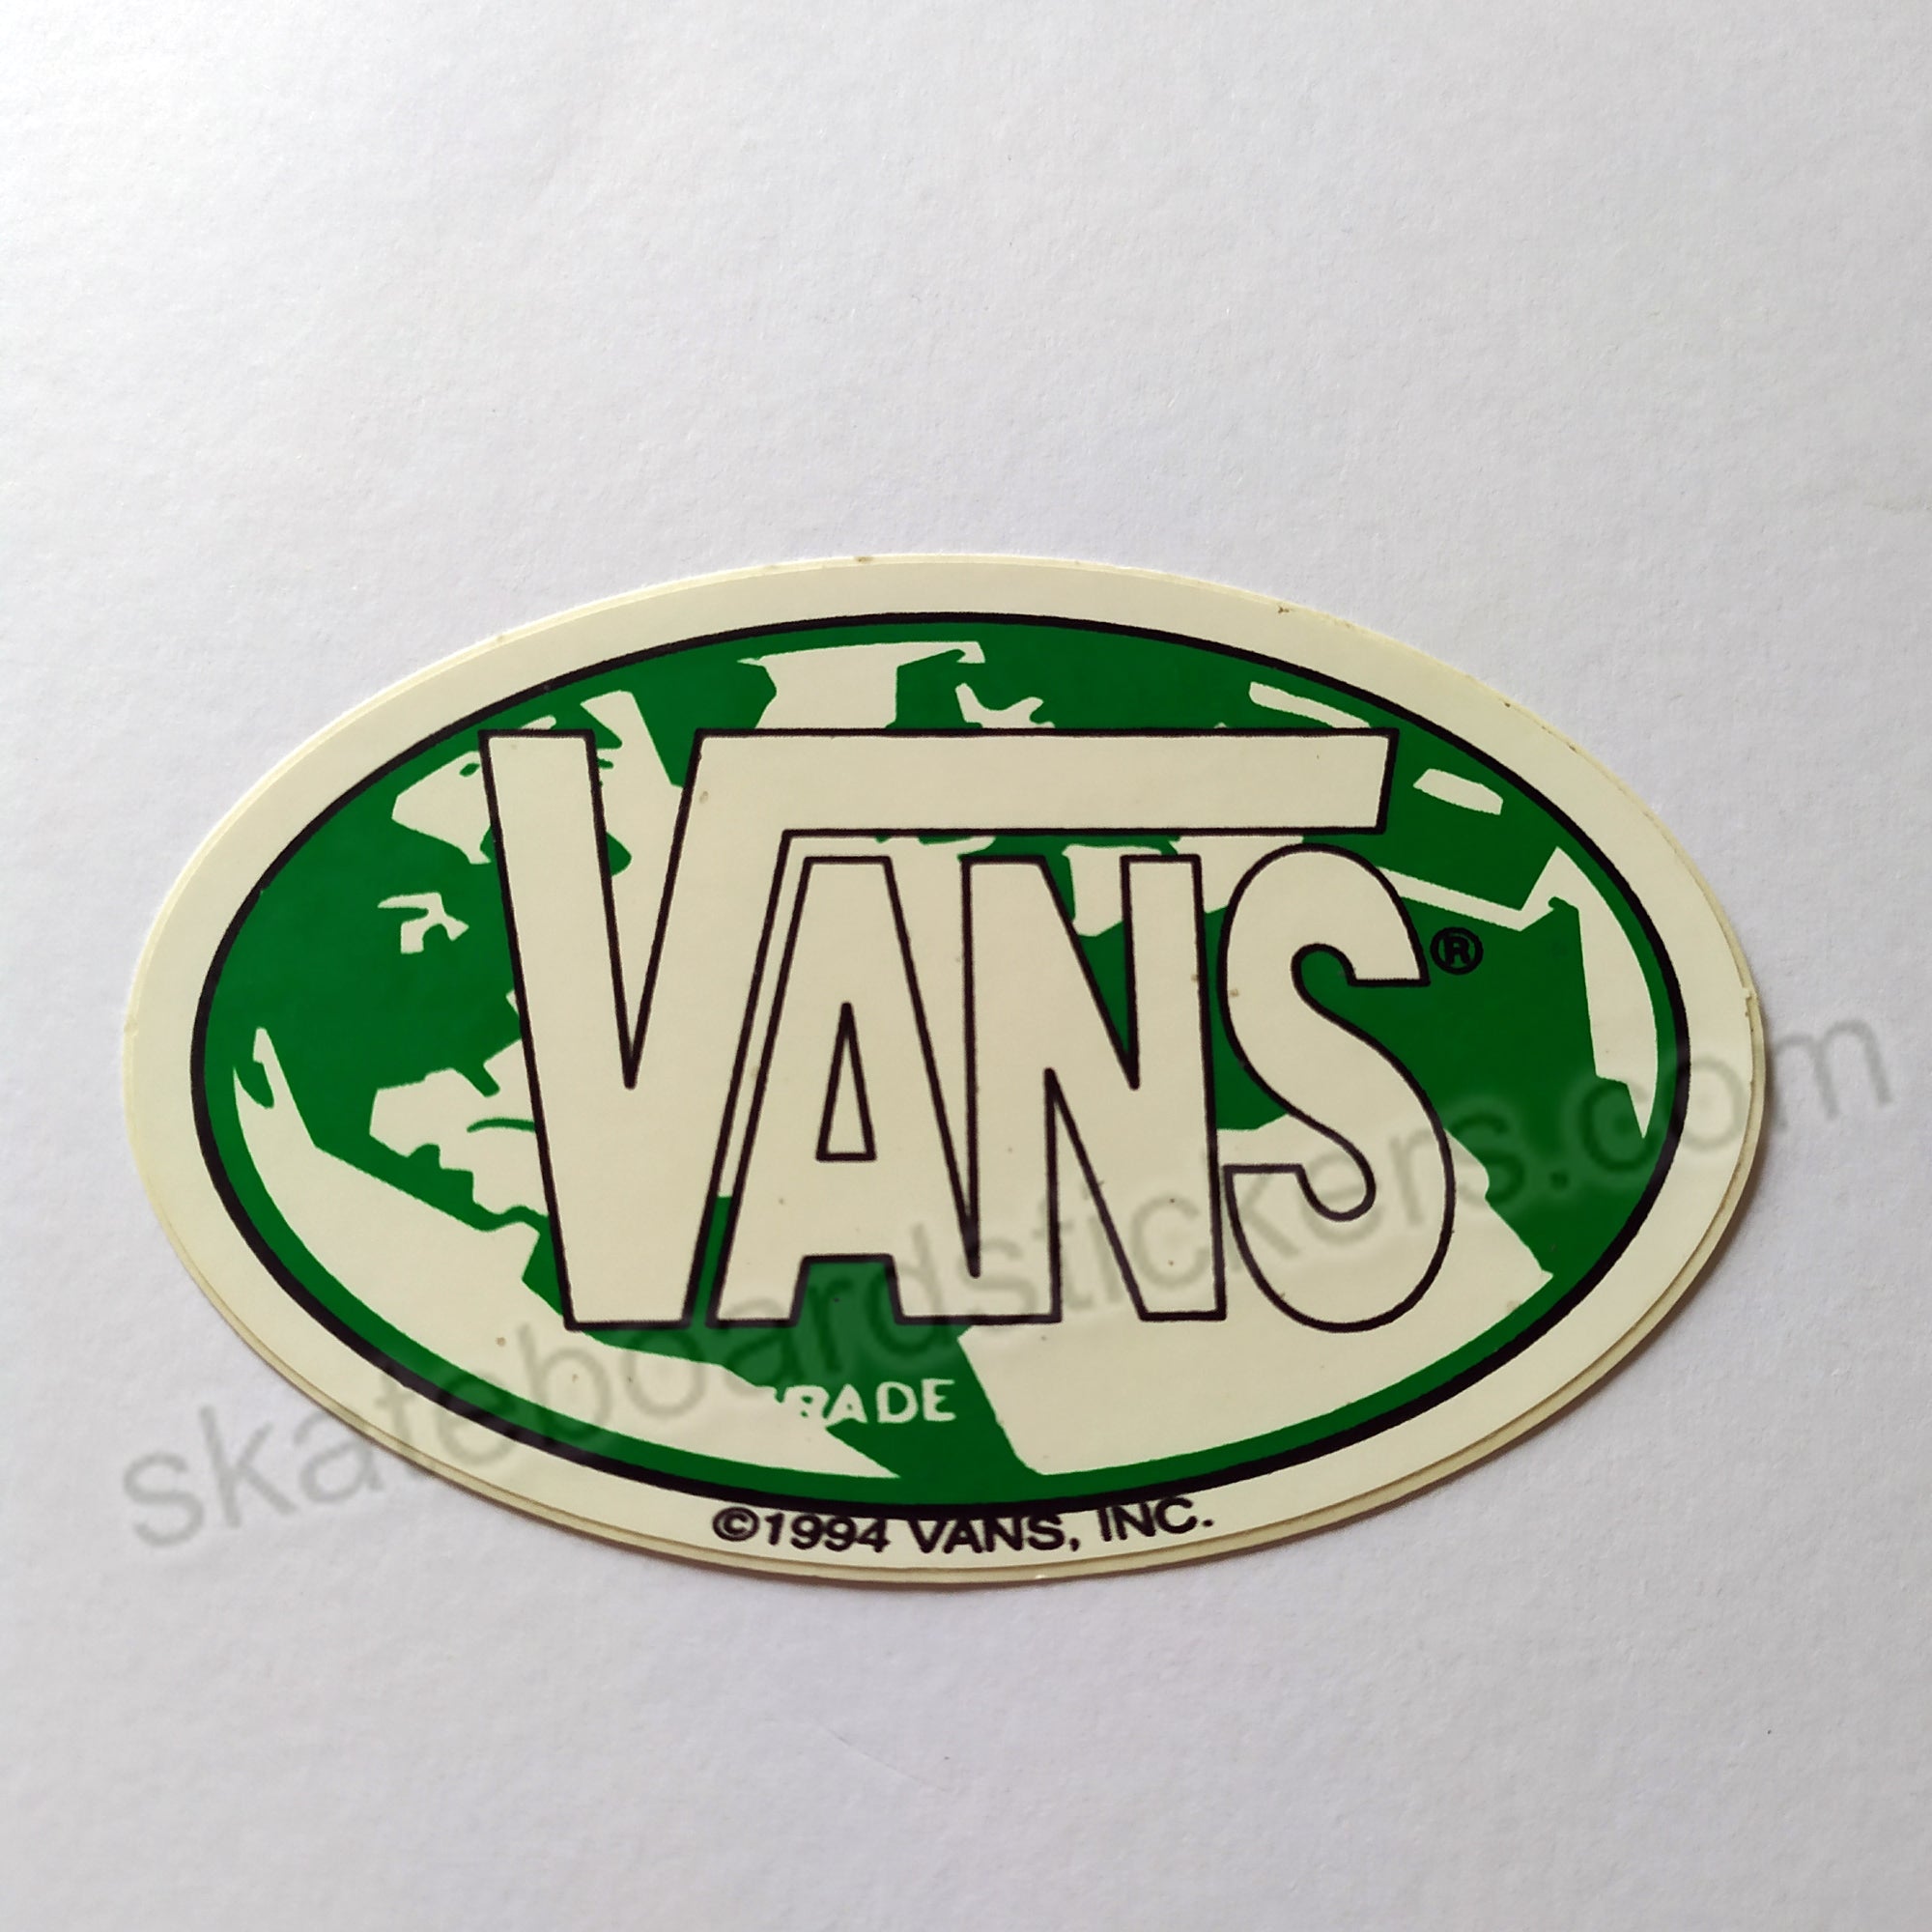 Vans Shoes Skateboard Sticker from the 90s! - SkateboardStickers.com